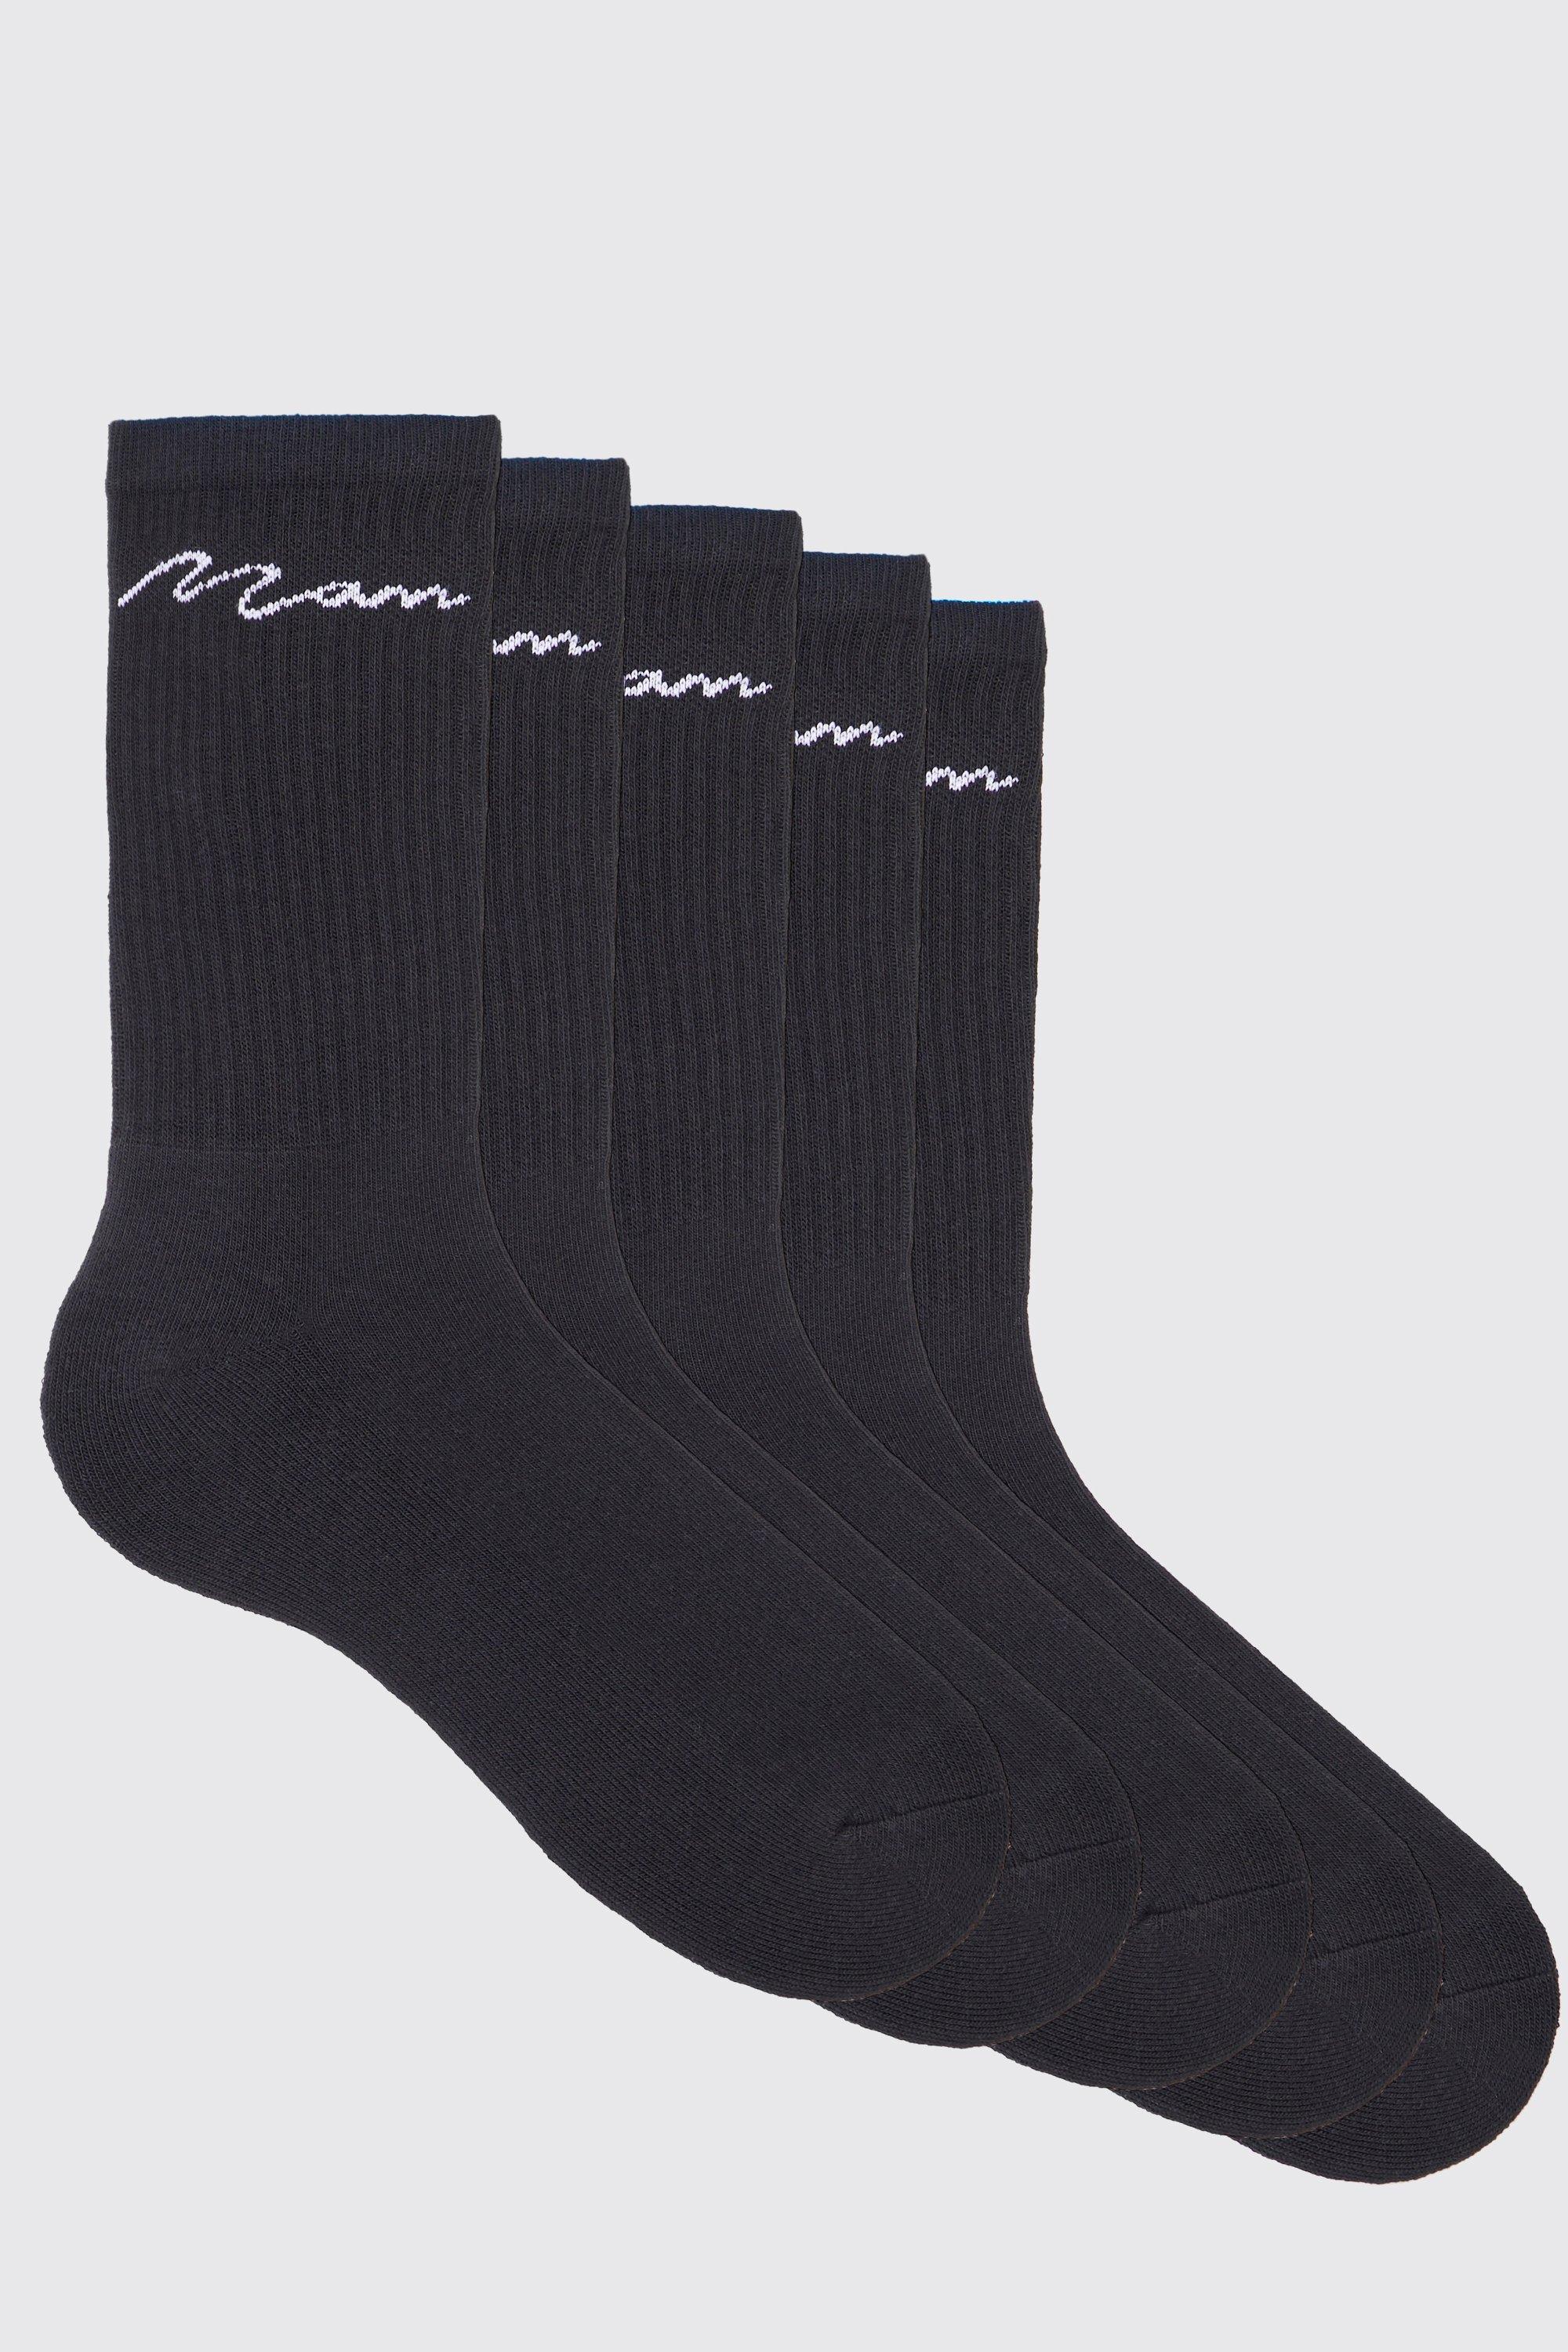 Mens Black 5 Pack Man Signature Sport Socks, Black